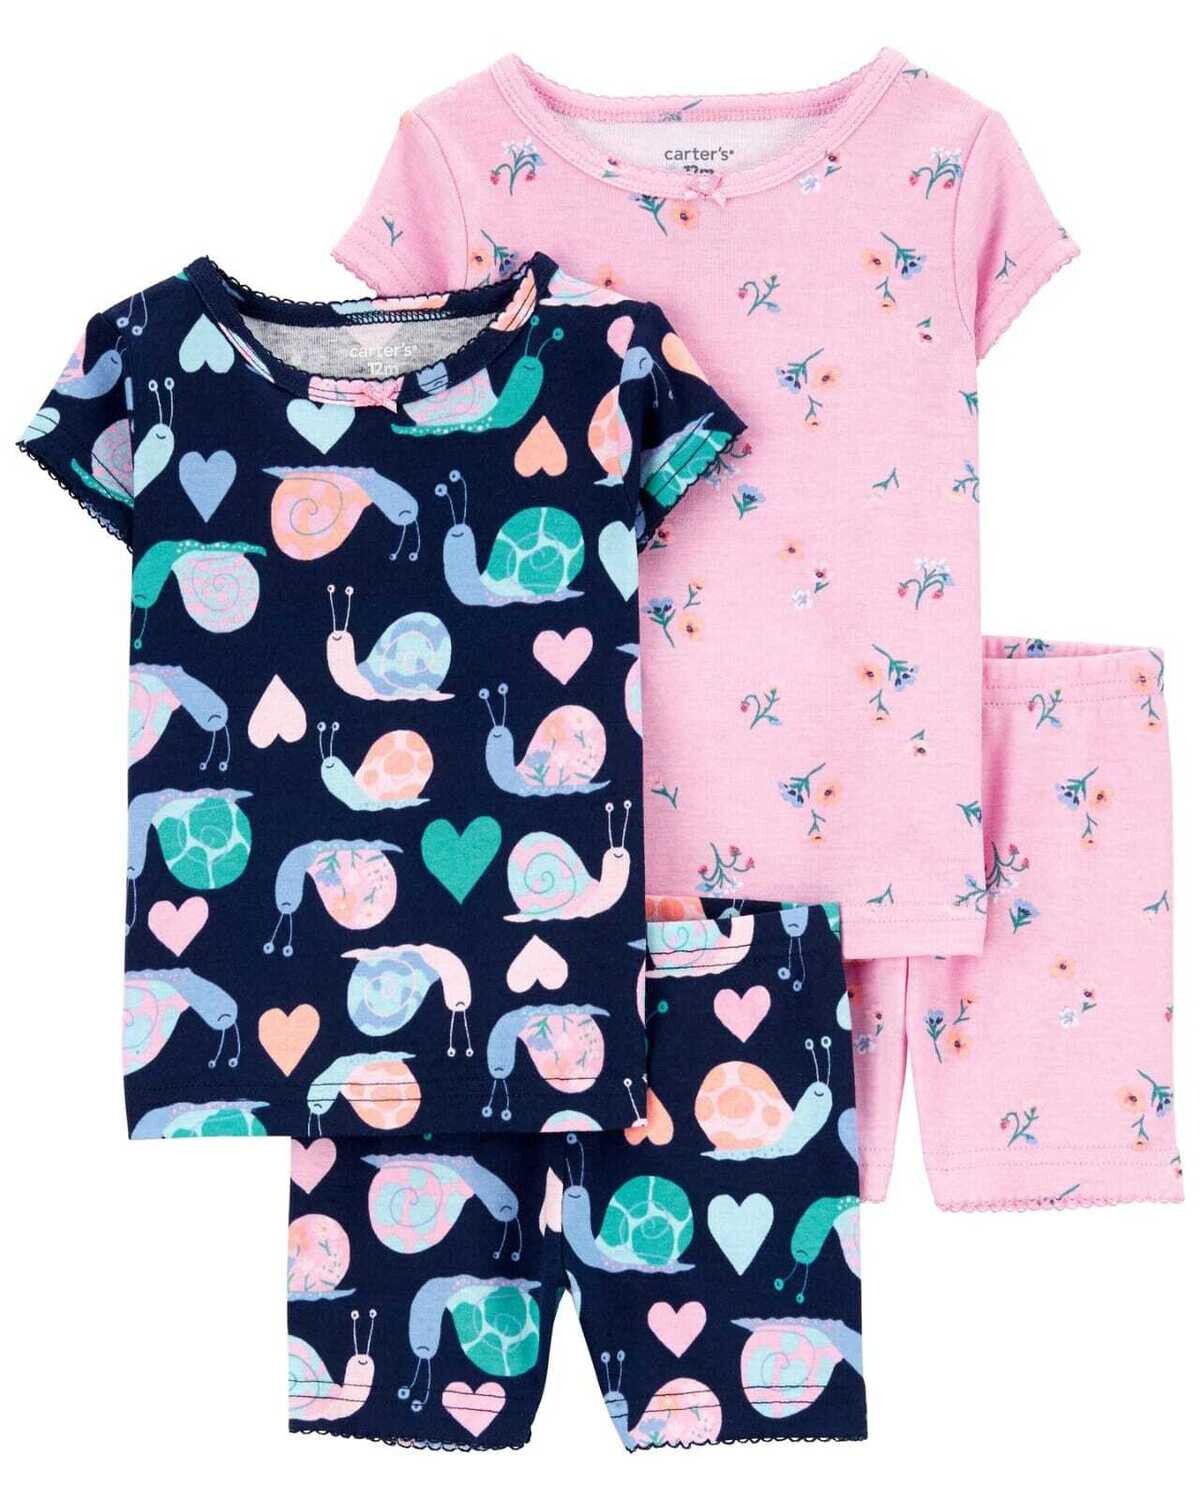 Original Carter's Baby & Toddler Girls 4-Piece 100% Snug Fit Cotton PJs